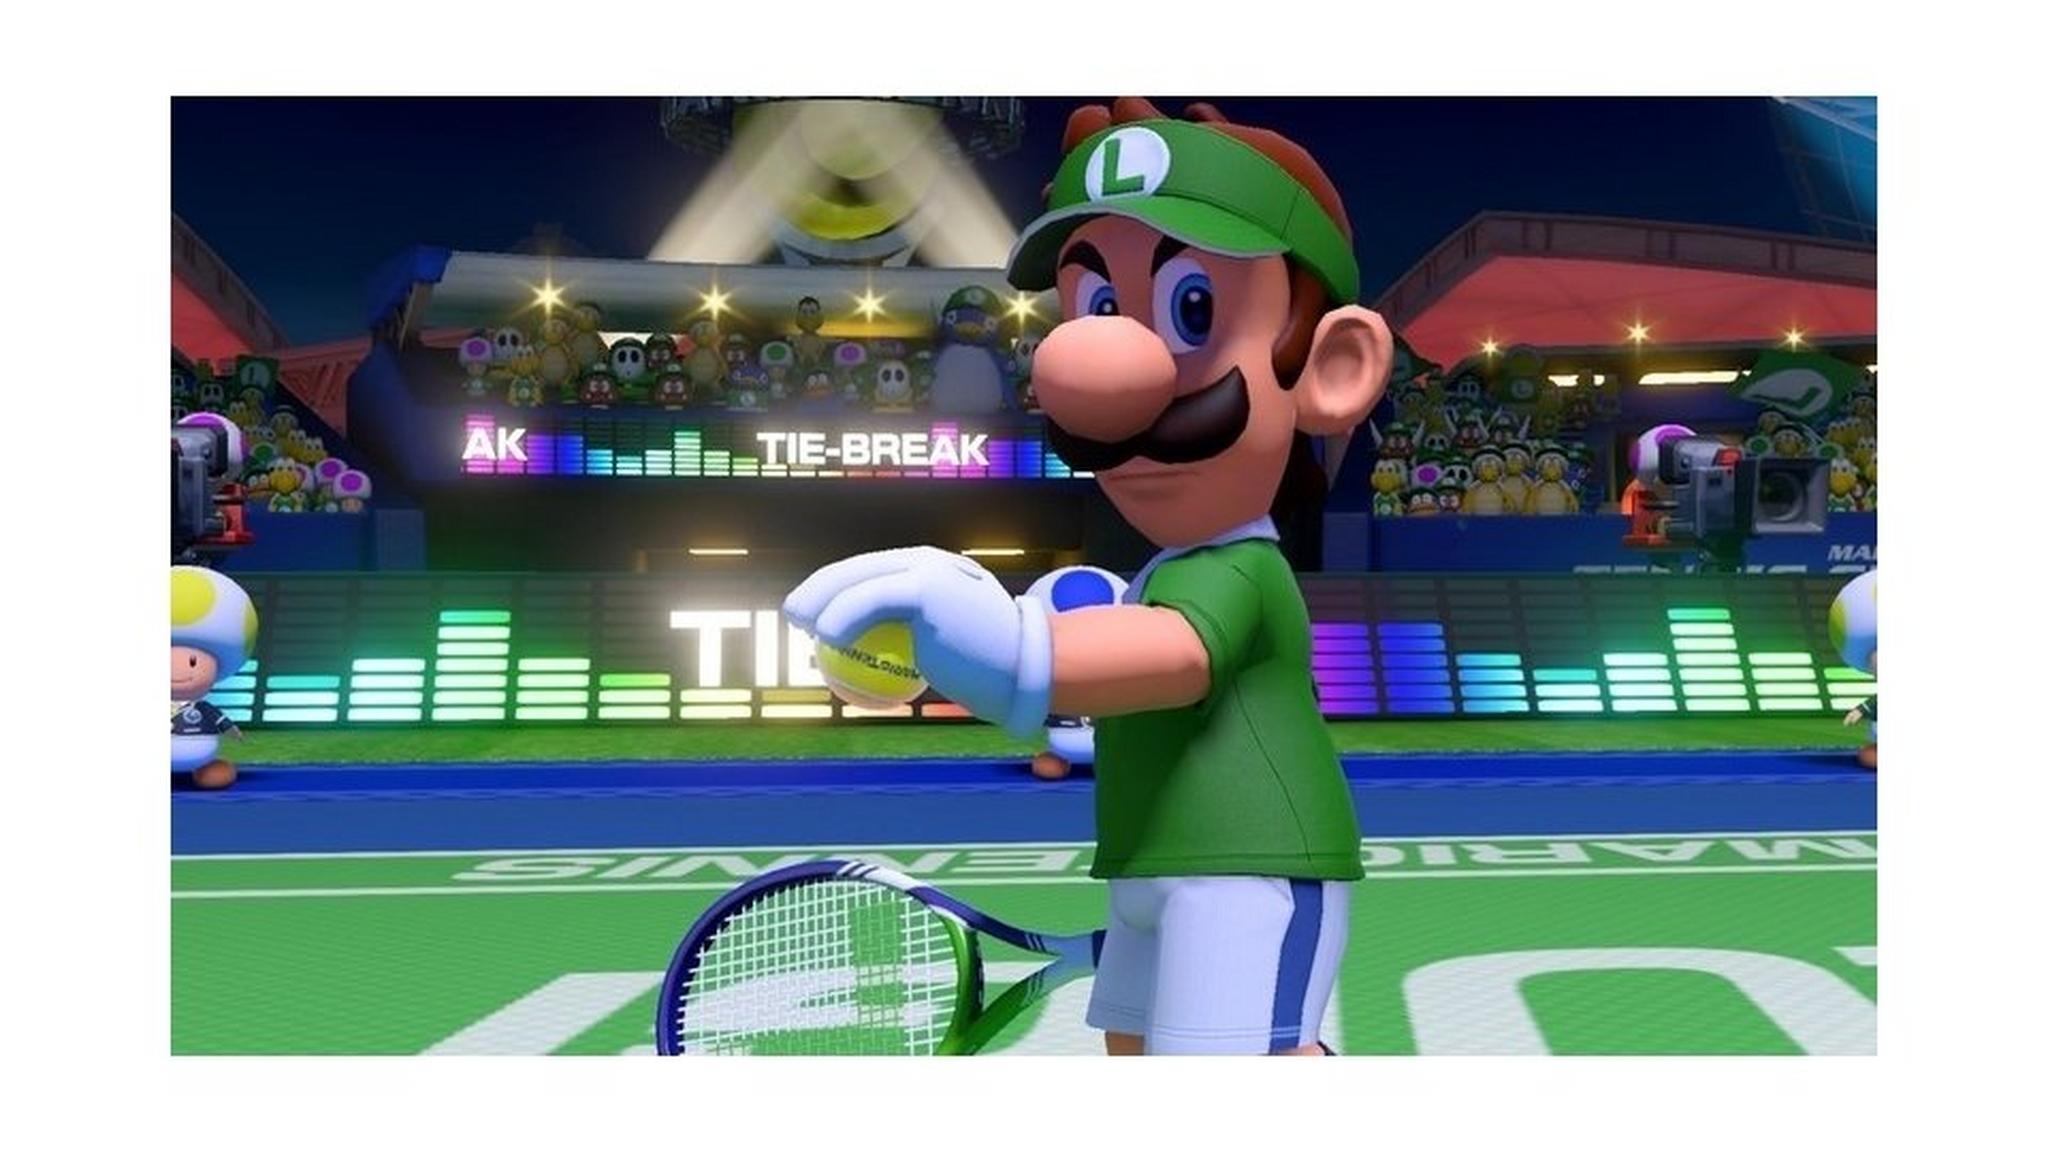 Mario Tennis Aces - Nintendo Switch Game